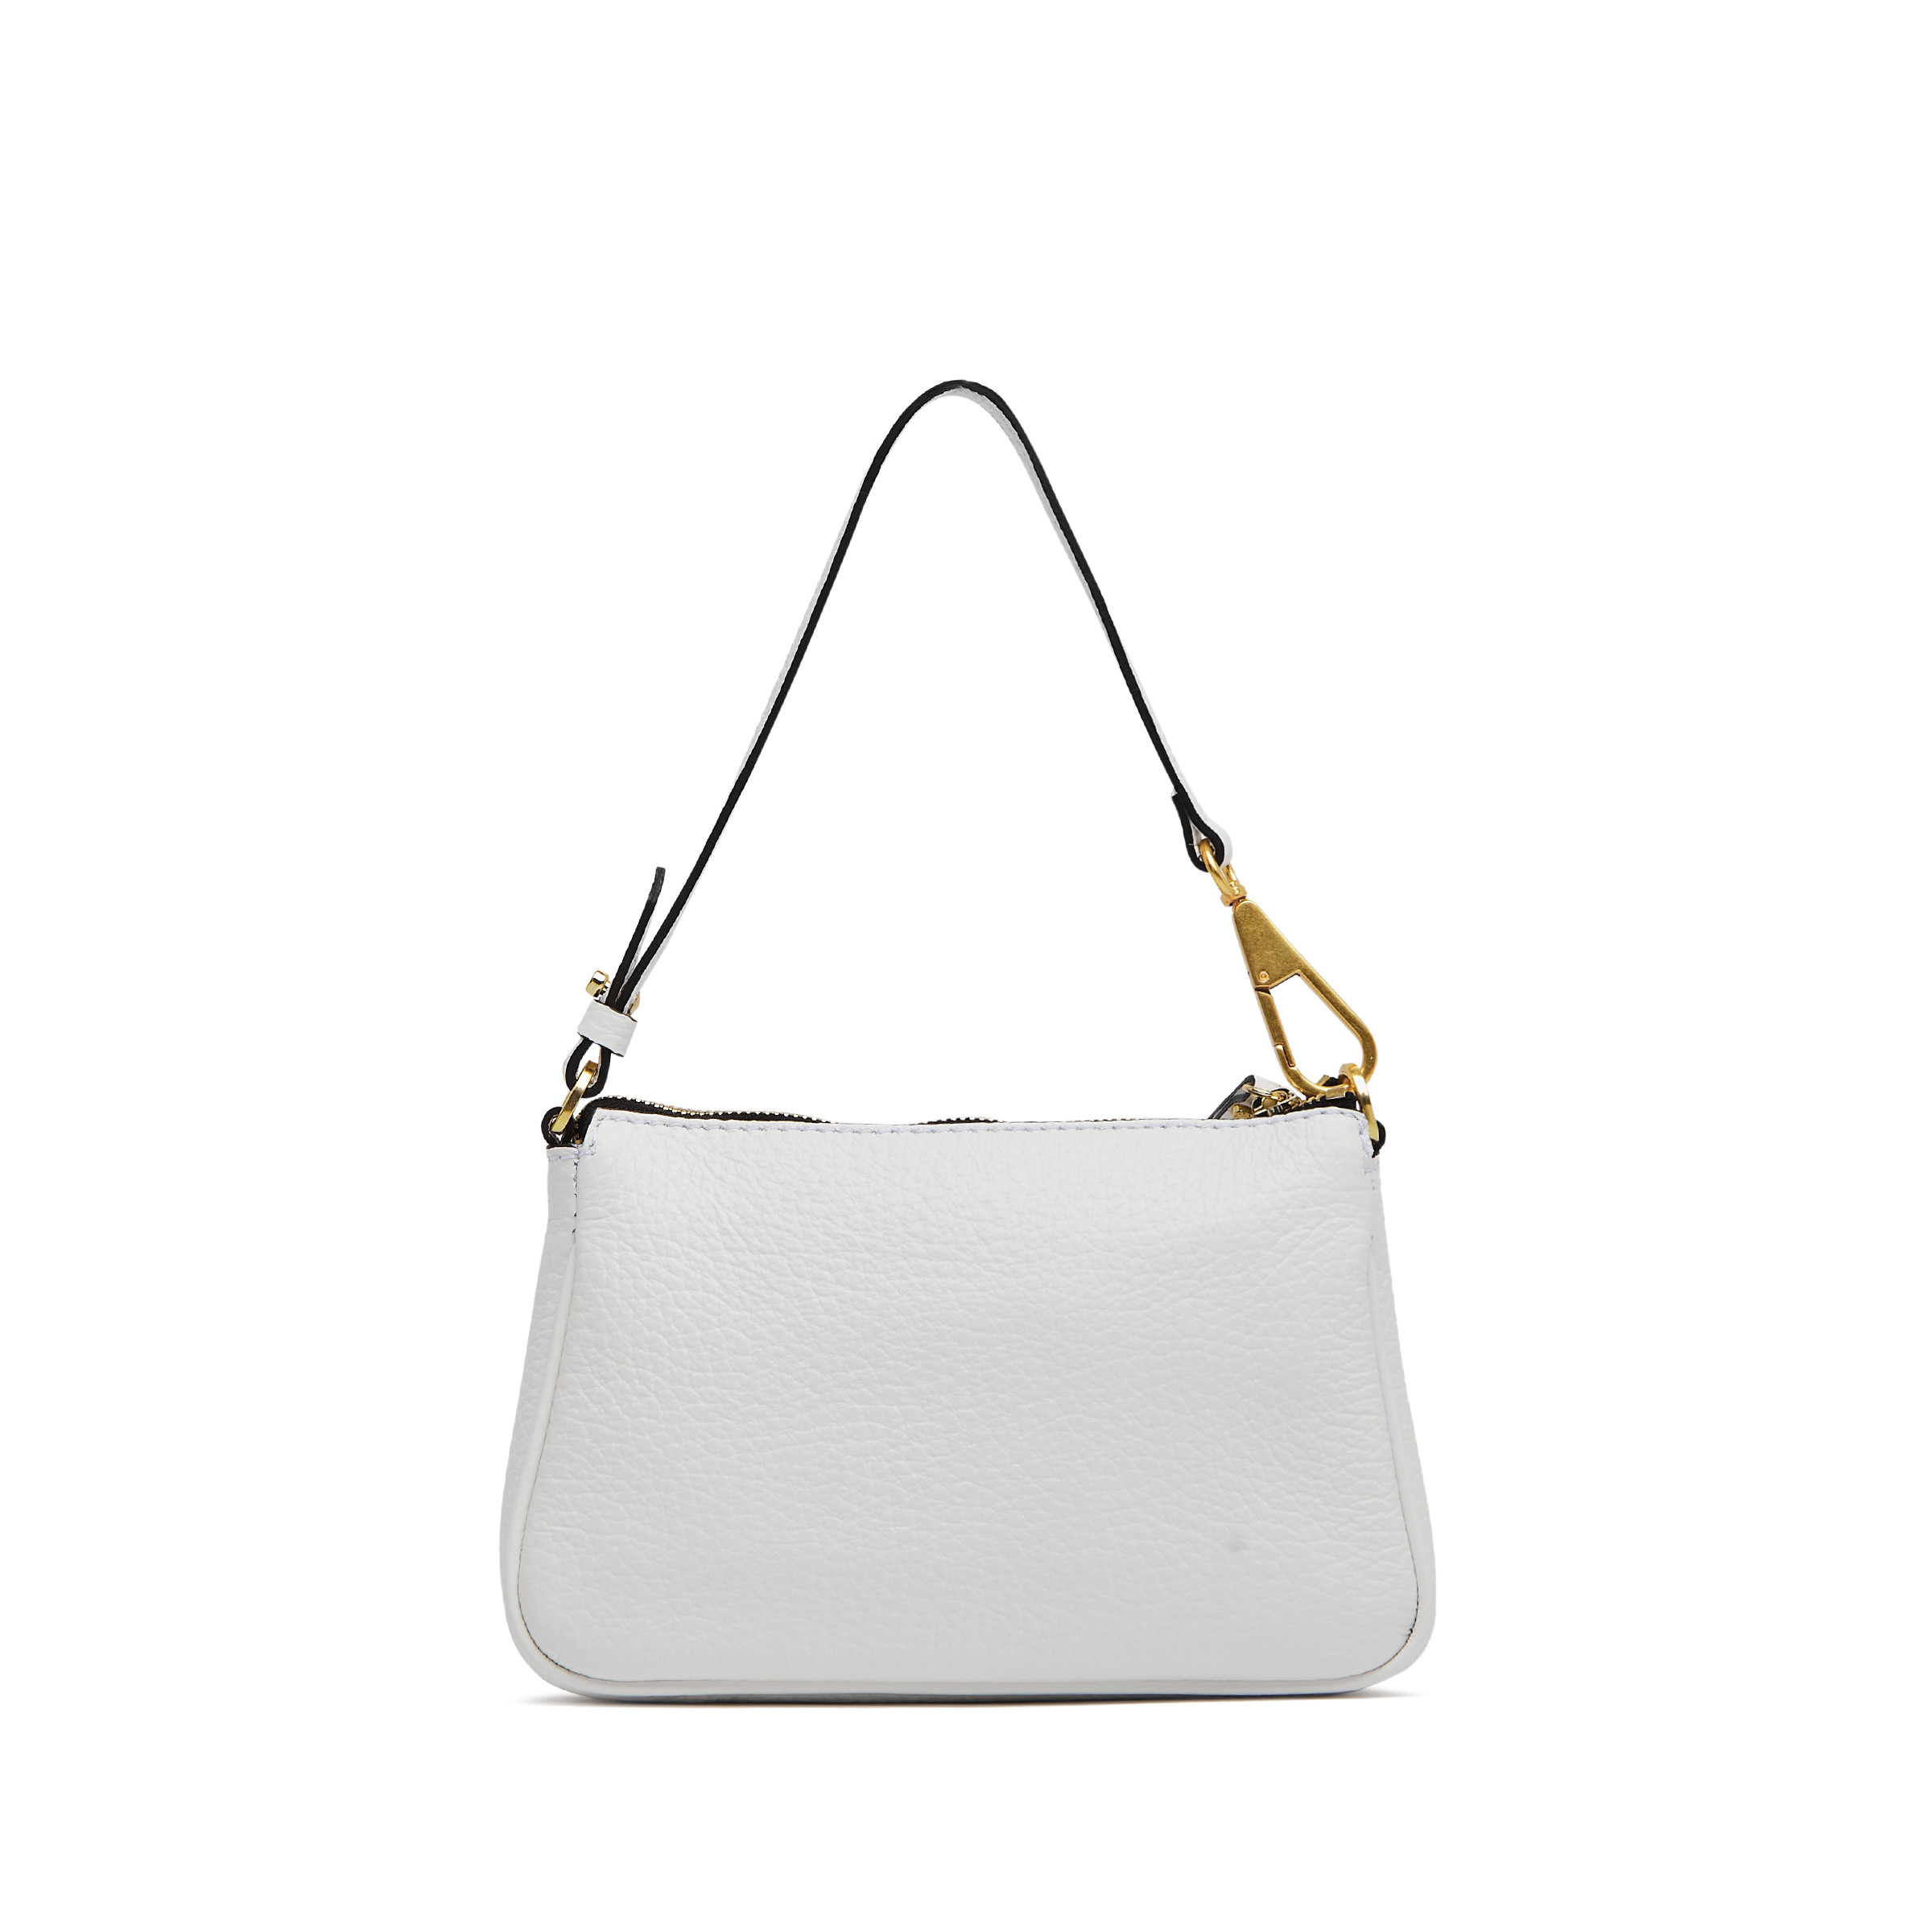 Gianni Chiarini - Brooke bag in leather, White, large image number 2